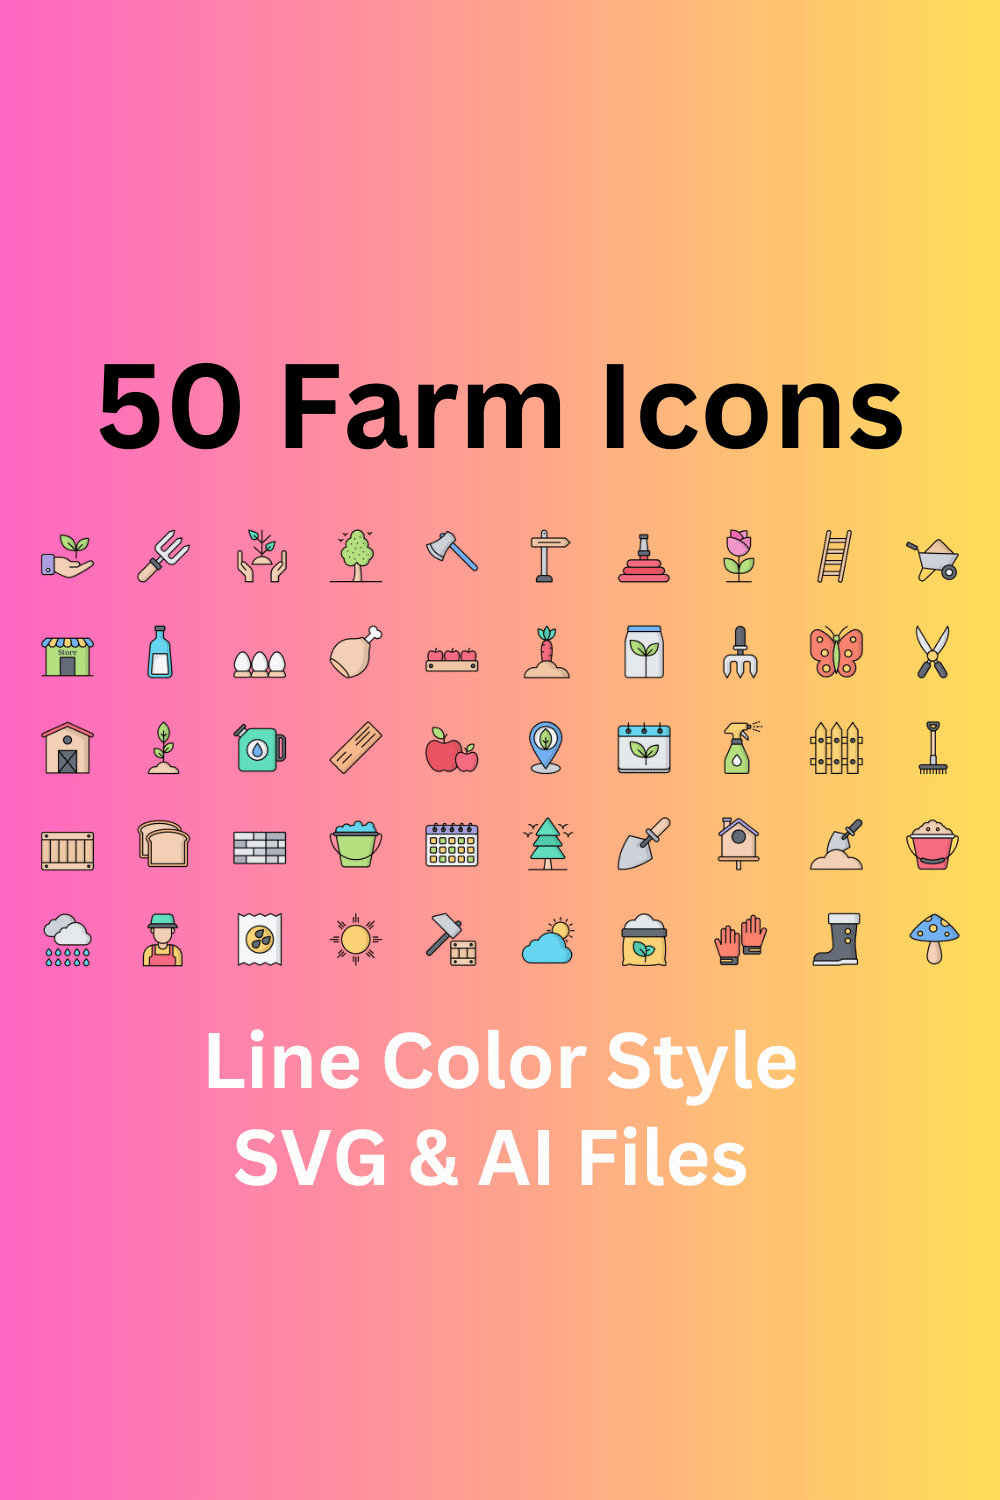 Farm Icon Set 50 Line Color Icons - SVG And AI Files pinterest preview image.